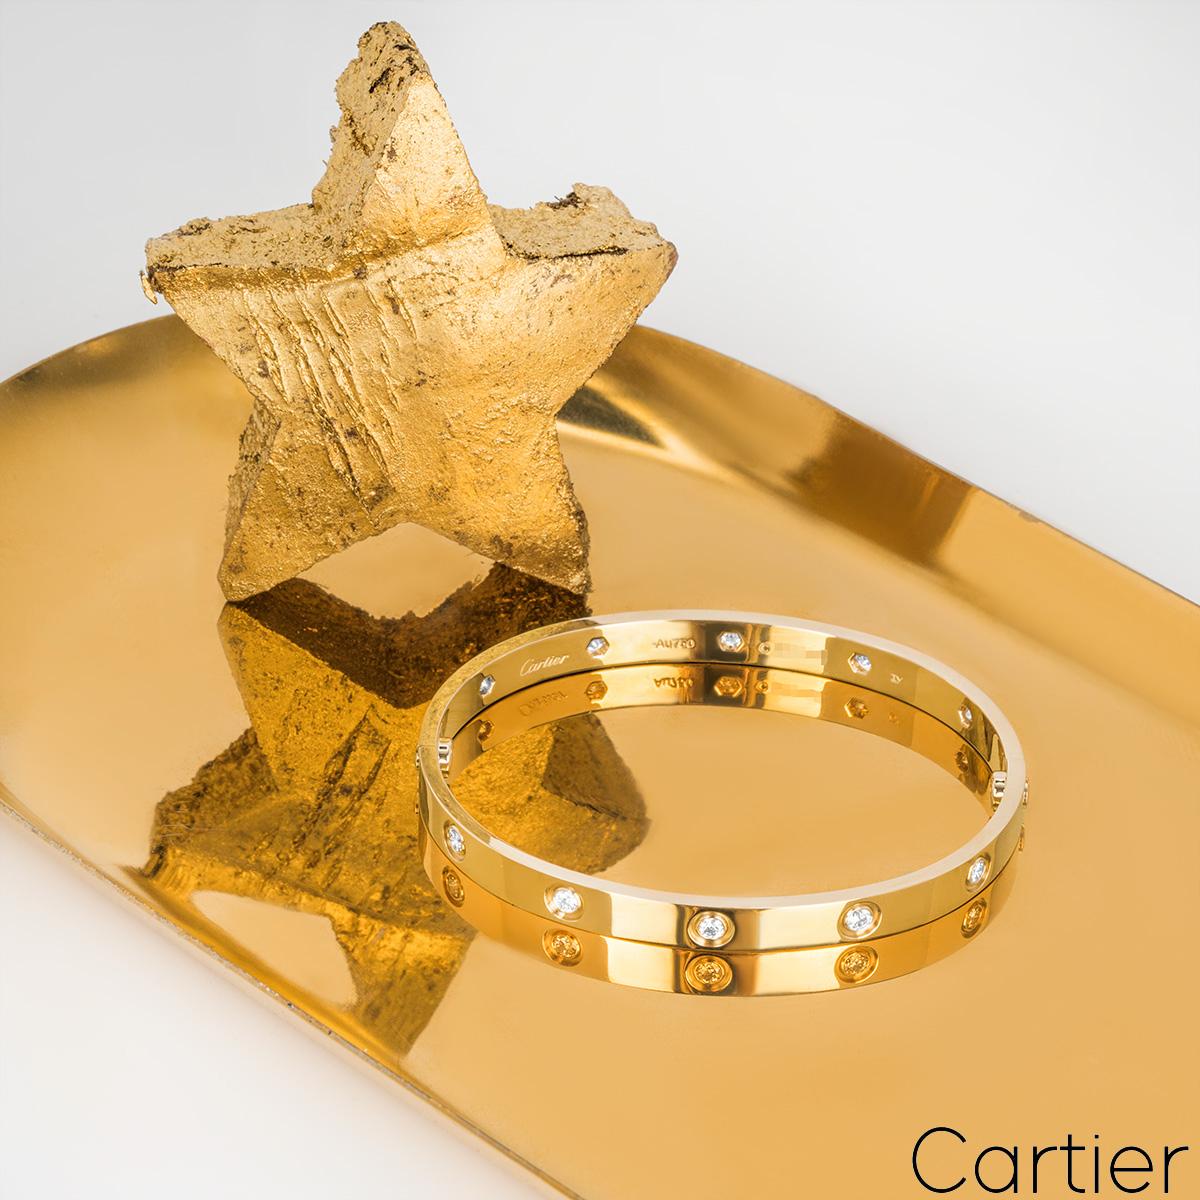 Cartier Yellow Gold Full Diamond Love Bracelet Size 16 B6040516 For Sale 1